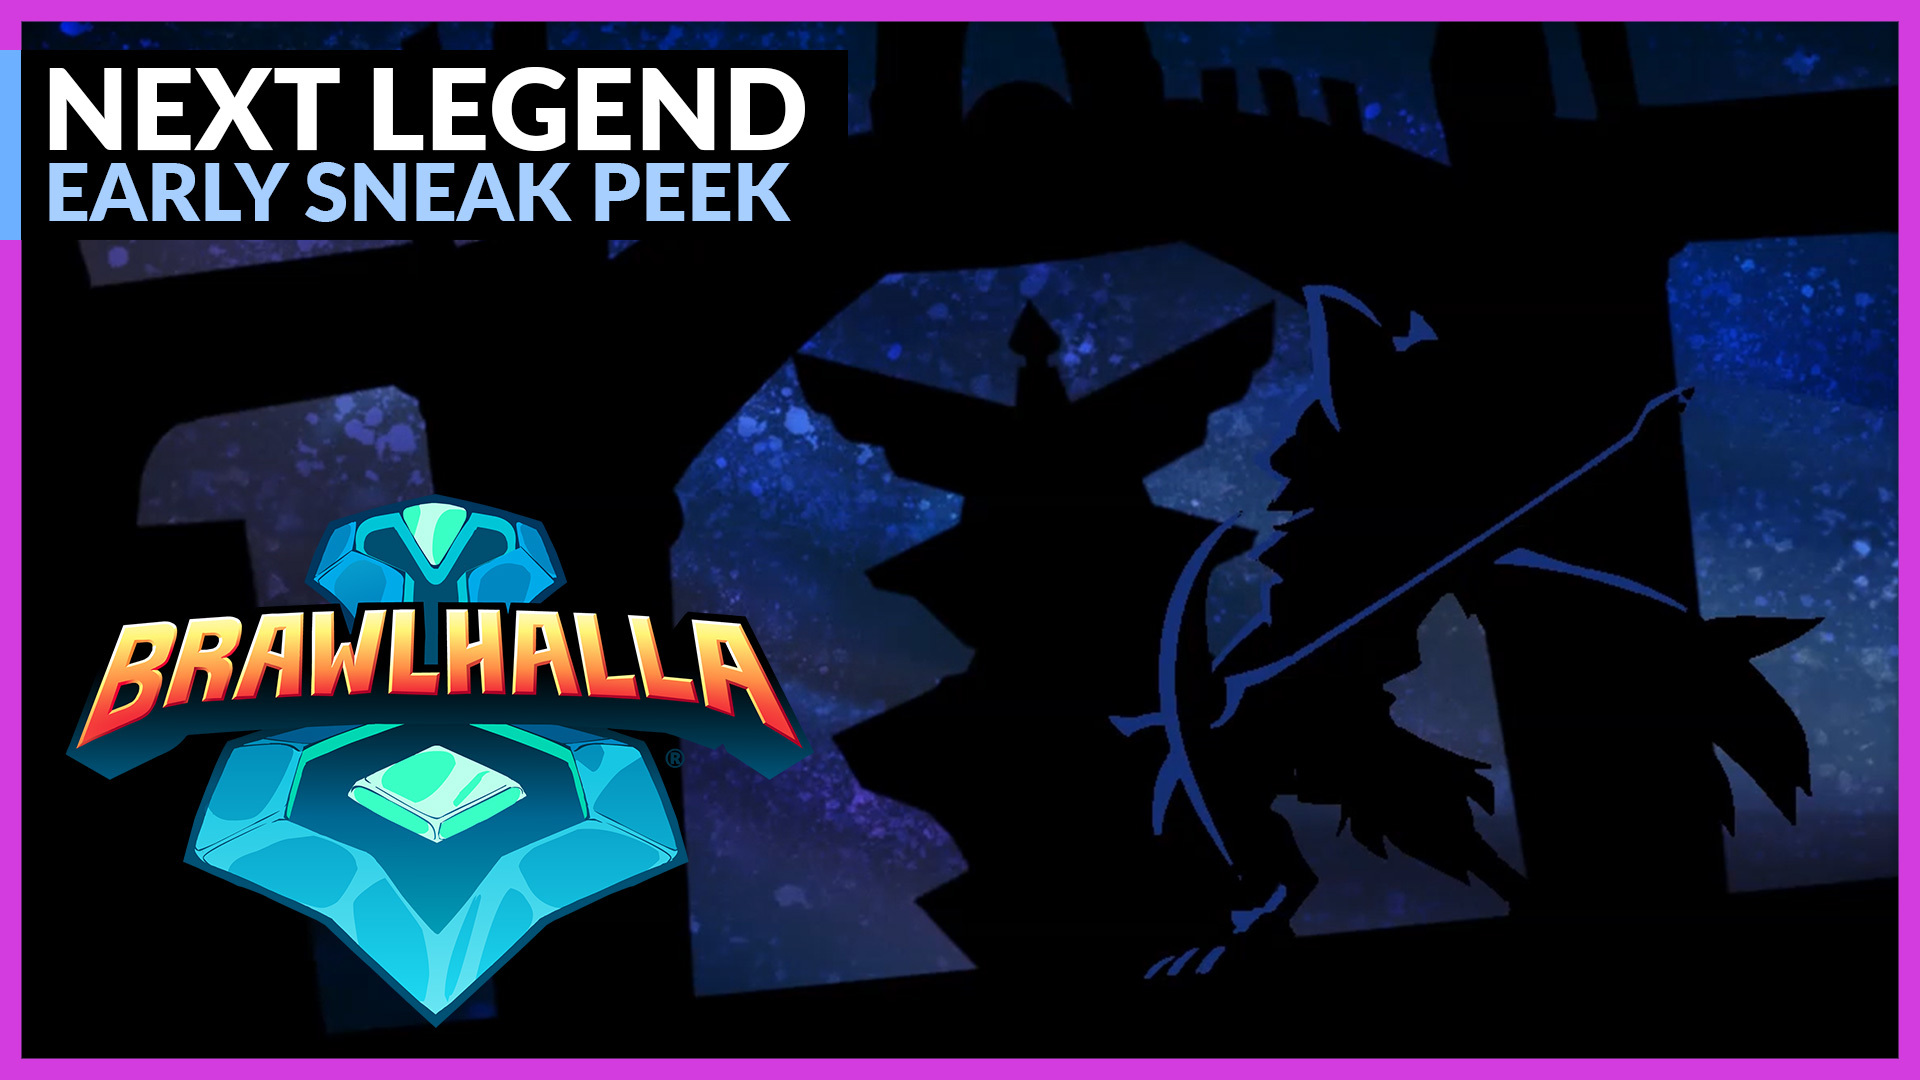 Get an early sneak peek at the next new Legend!